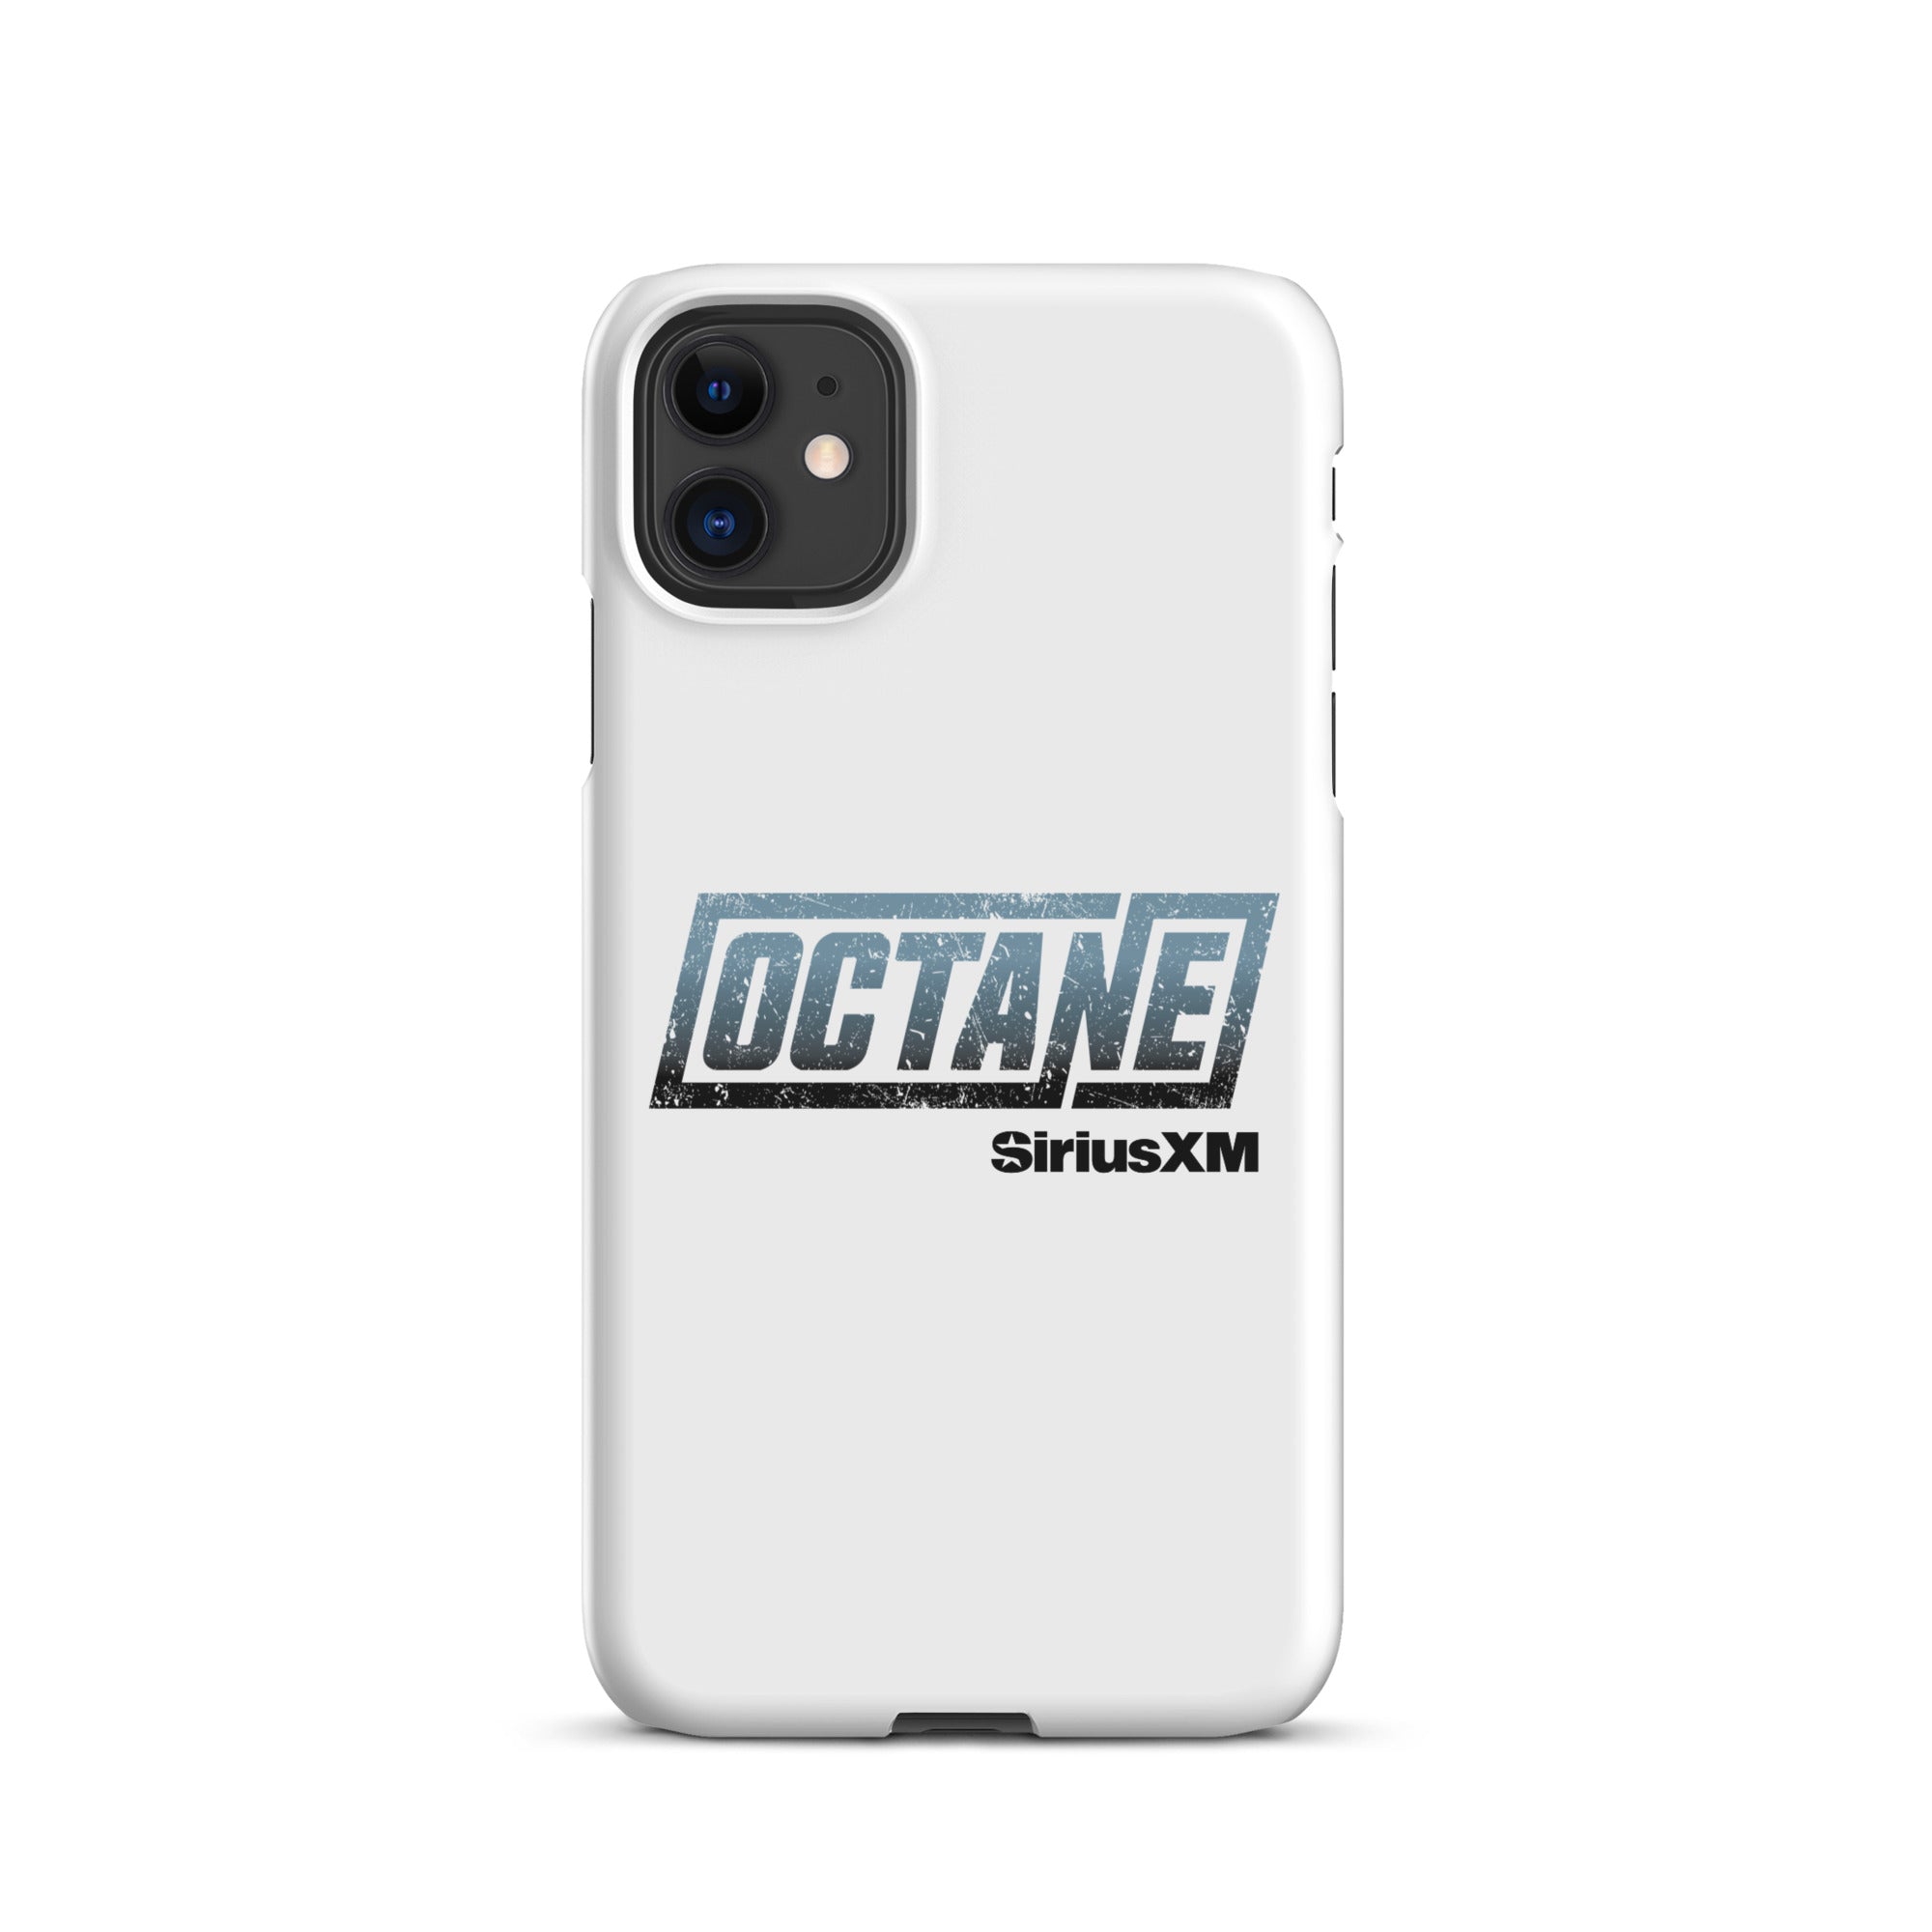 Octane: iPhone® Snap Case